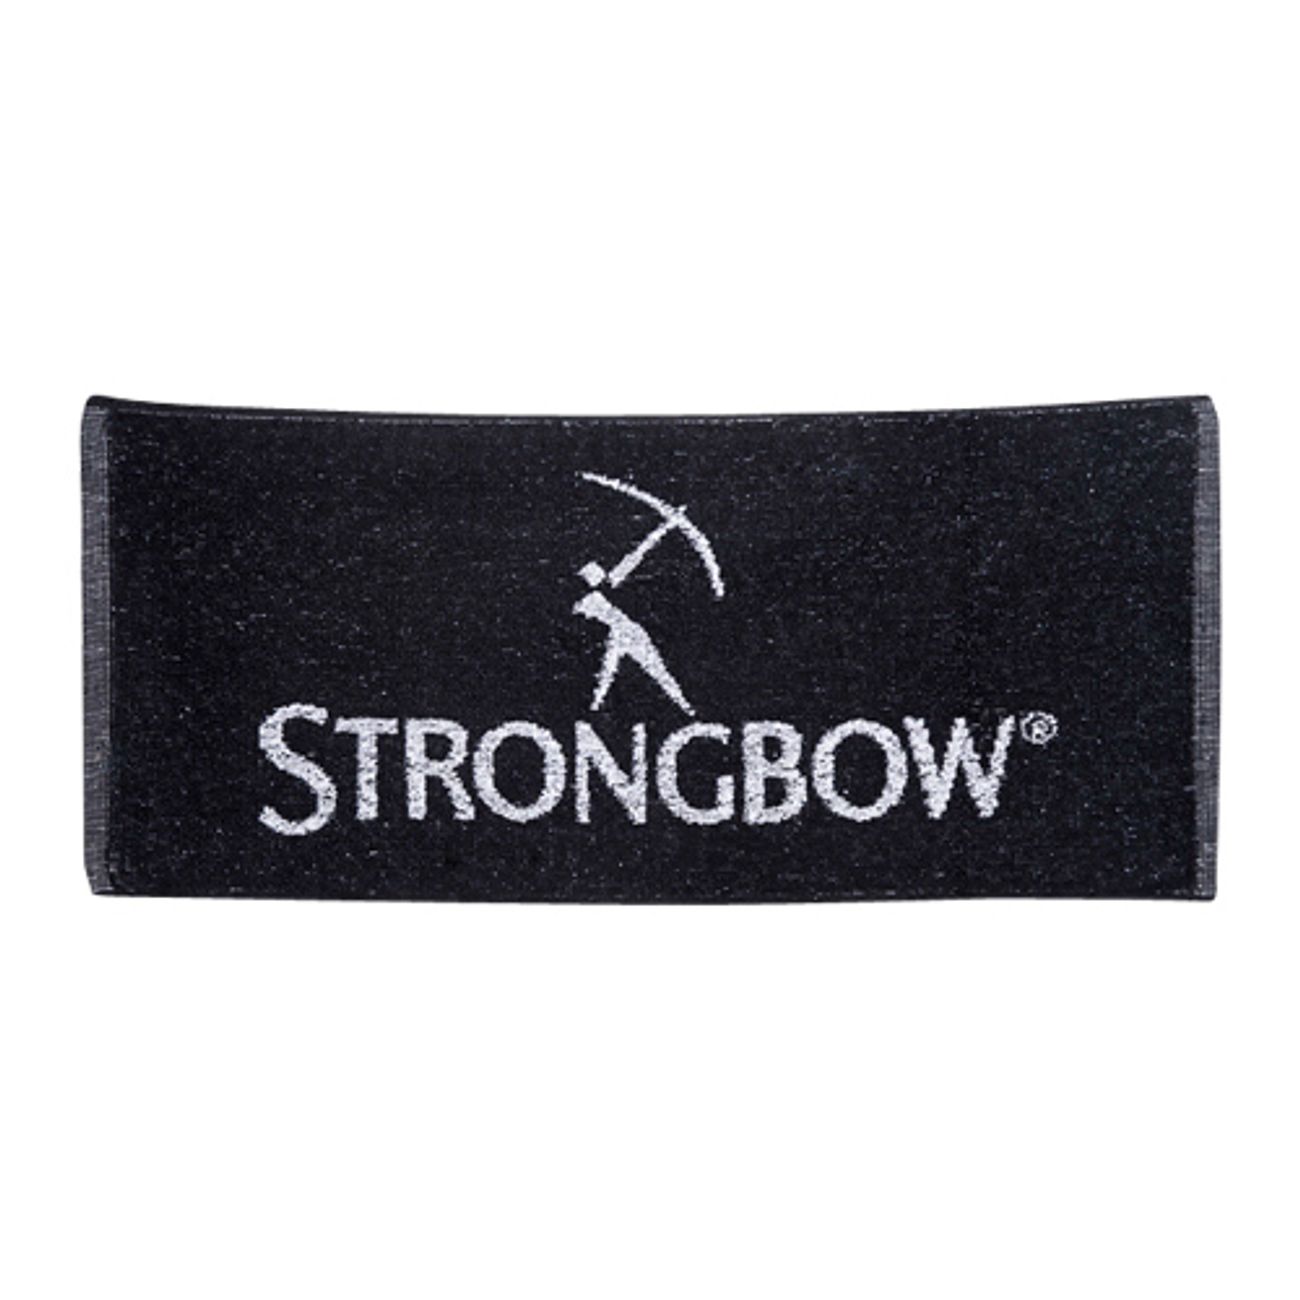 barhandduk-strongbow-1